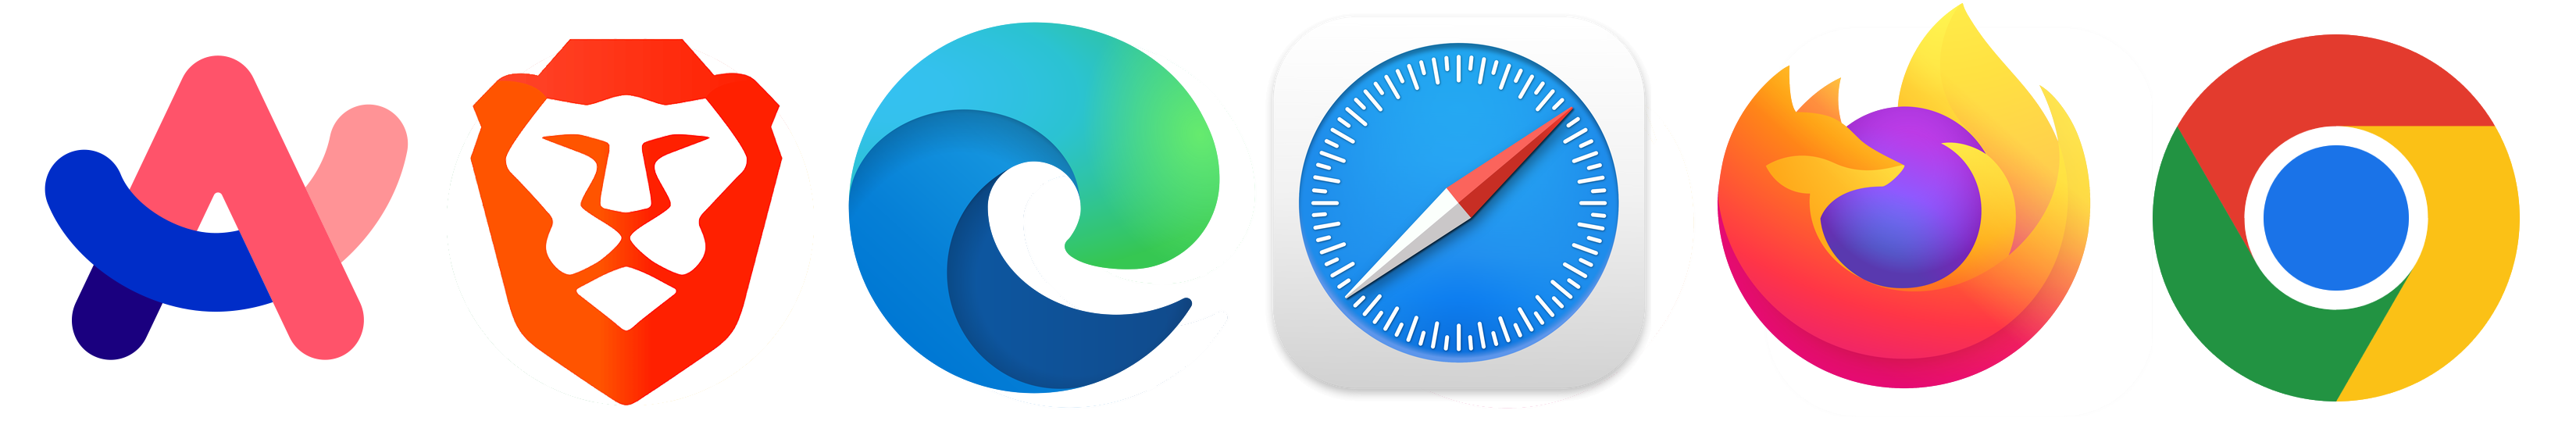 browsers logos 2023